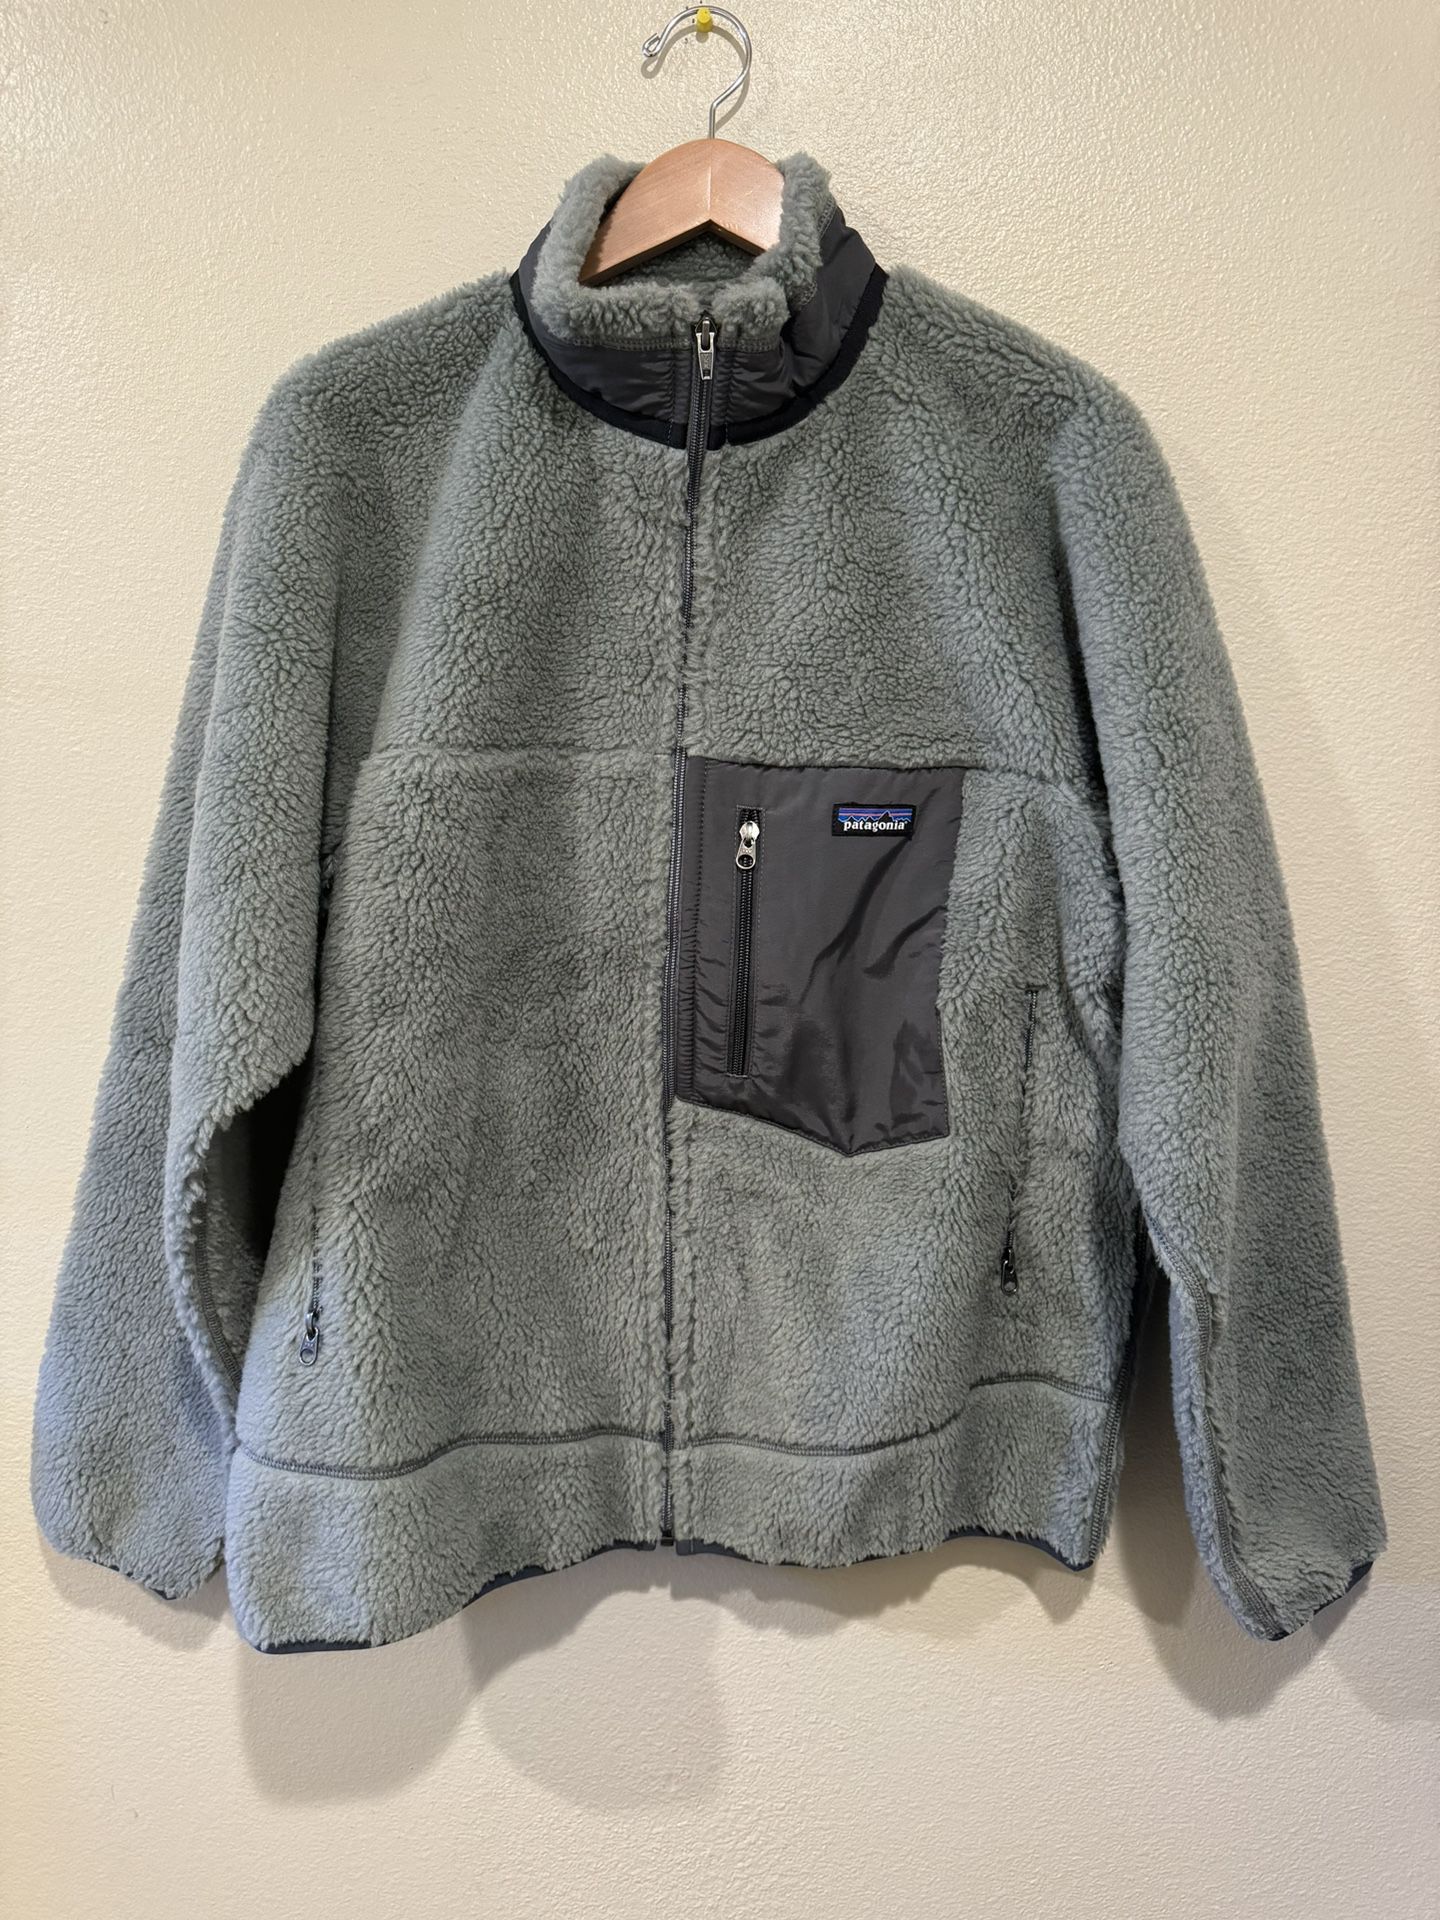 Patagonia Classic Retro X Sherpa Fleece Jacket Gray Grey Men’s Size L Large